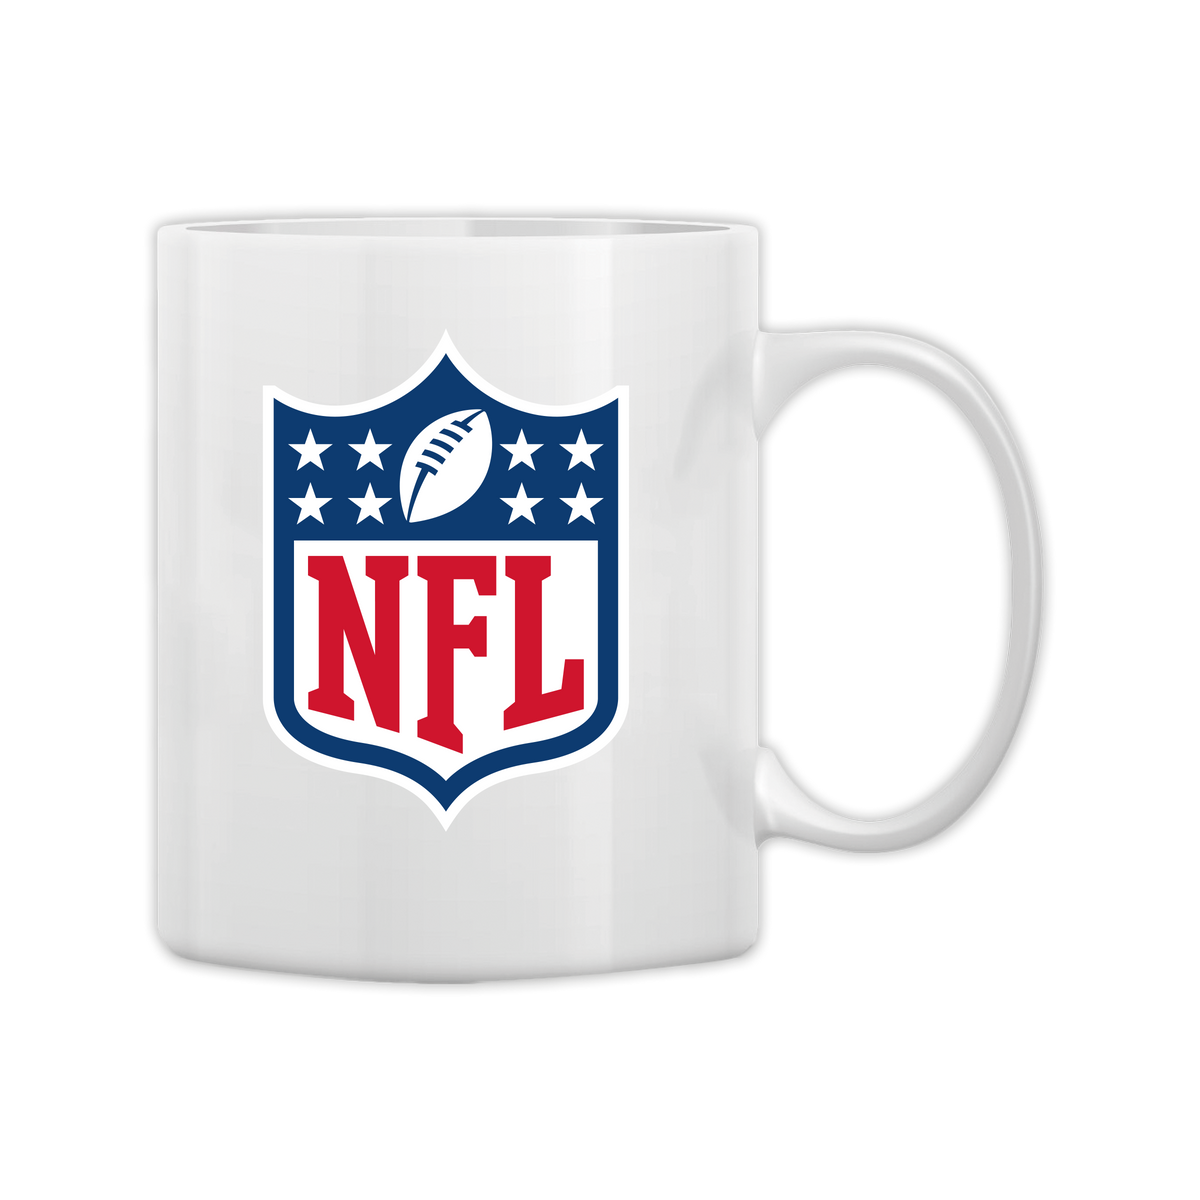 NFL San Francisco 49ers Full Wrap Travel Mug (500ml/16oz.)